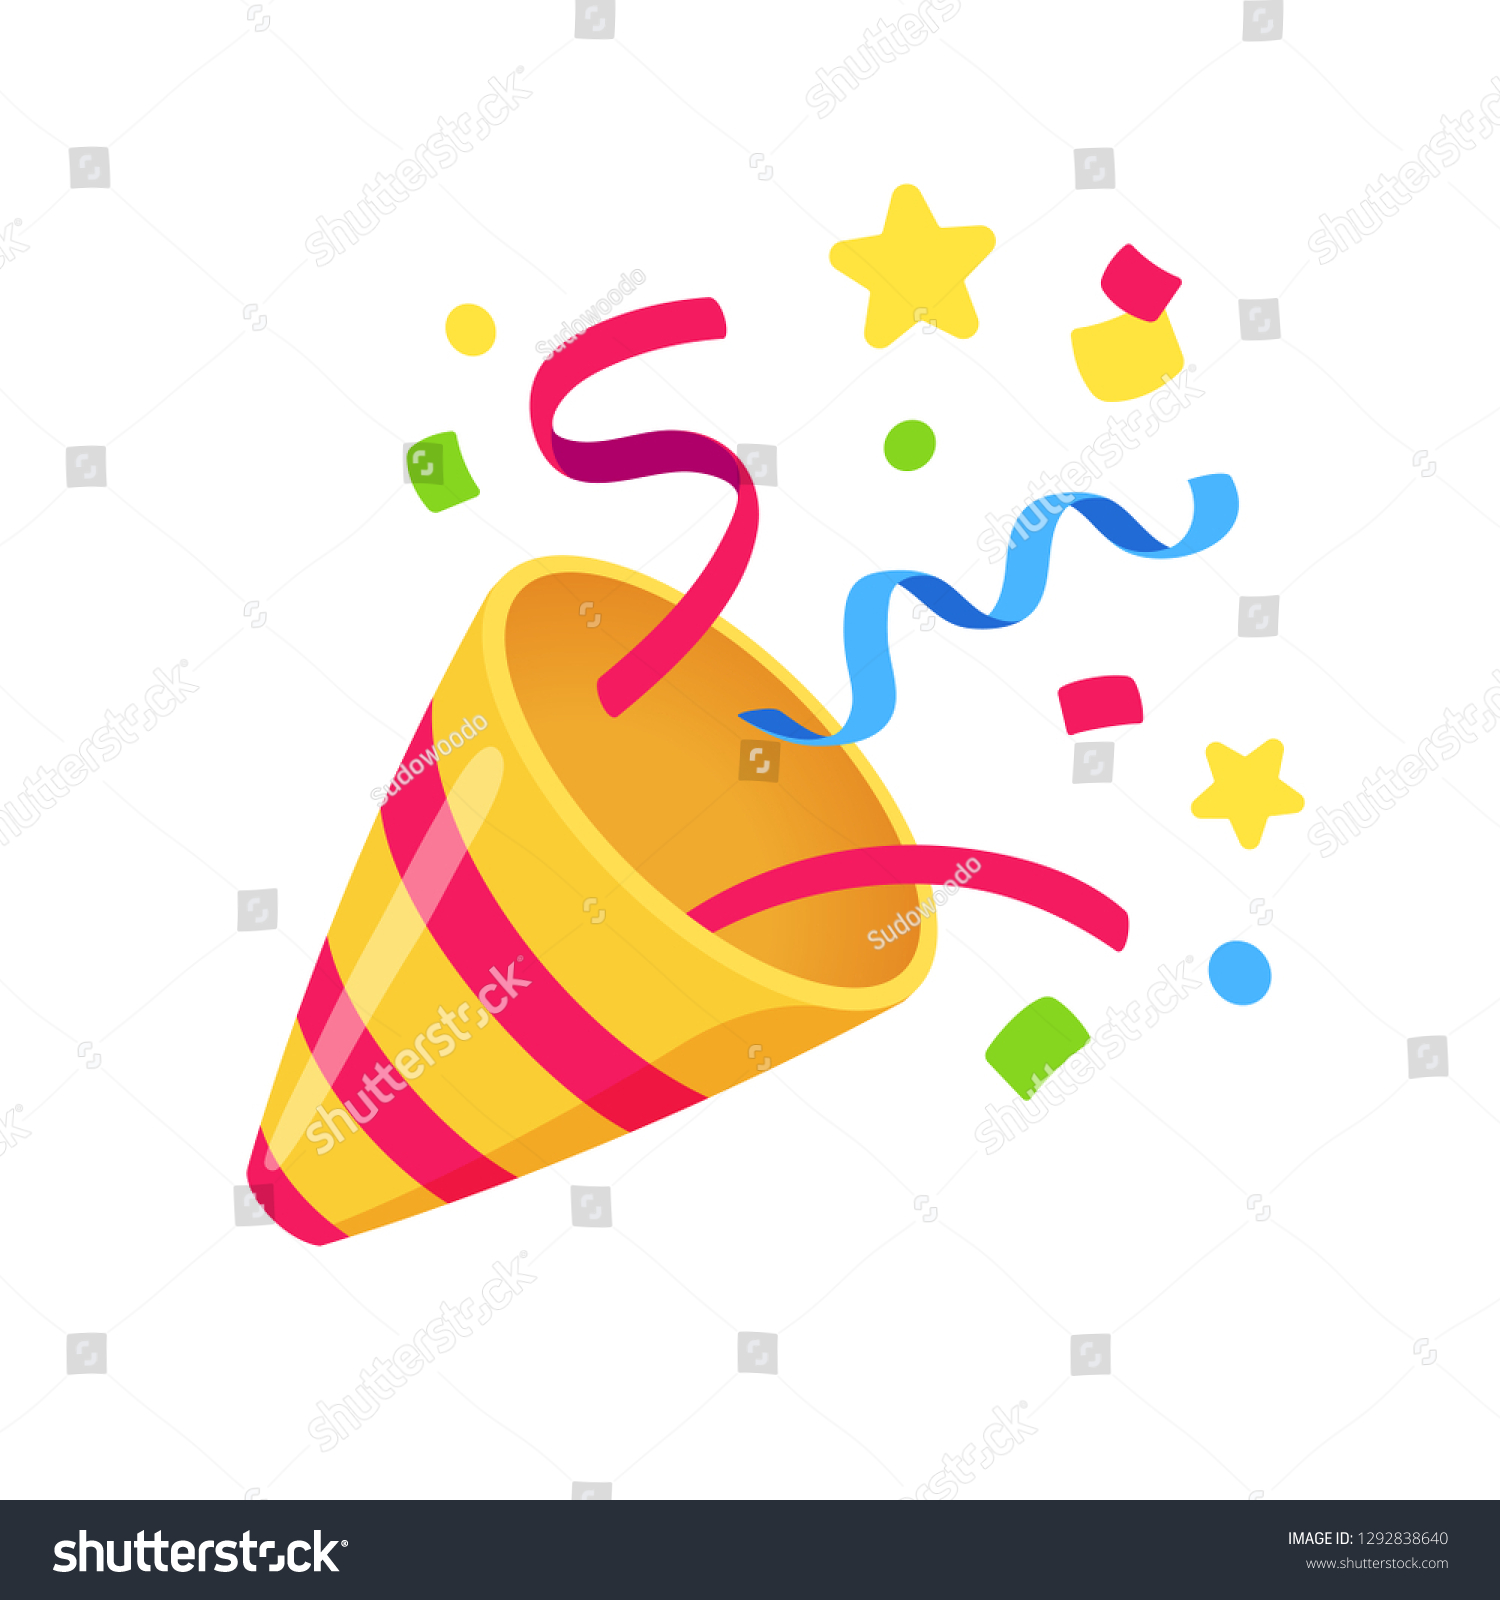 Exploding party popper with confetti, bright cartoon birthday cracker. Isolated vector illustration of celebration symbol emoji. #1292838640